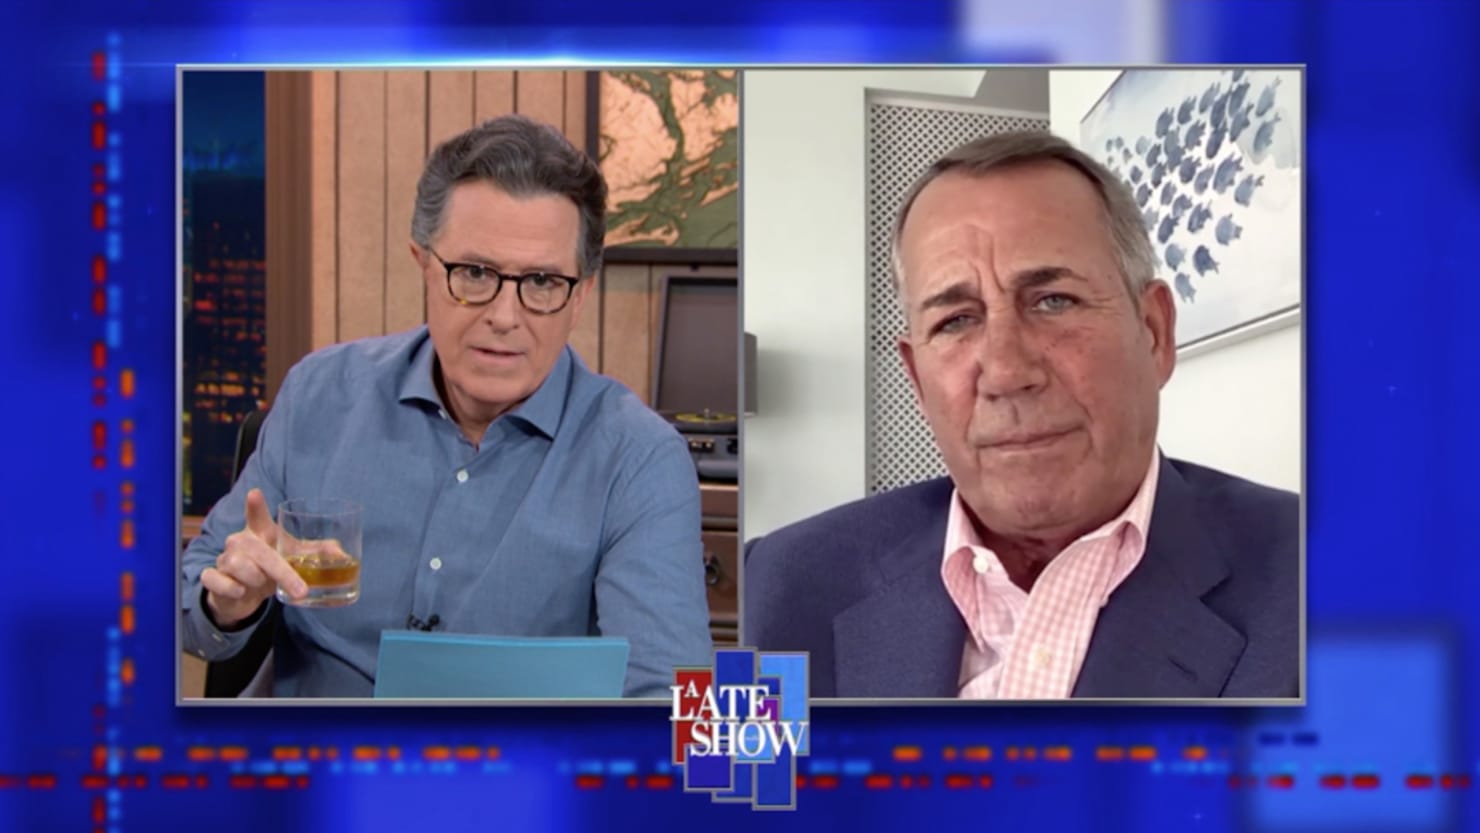 Stephen Colbert confronts John Boehner for accusing ‘Both Sides’